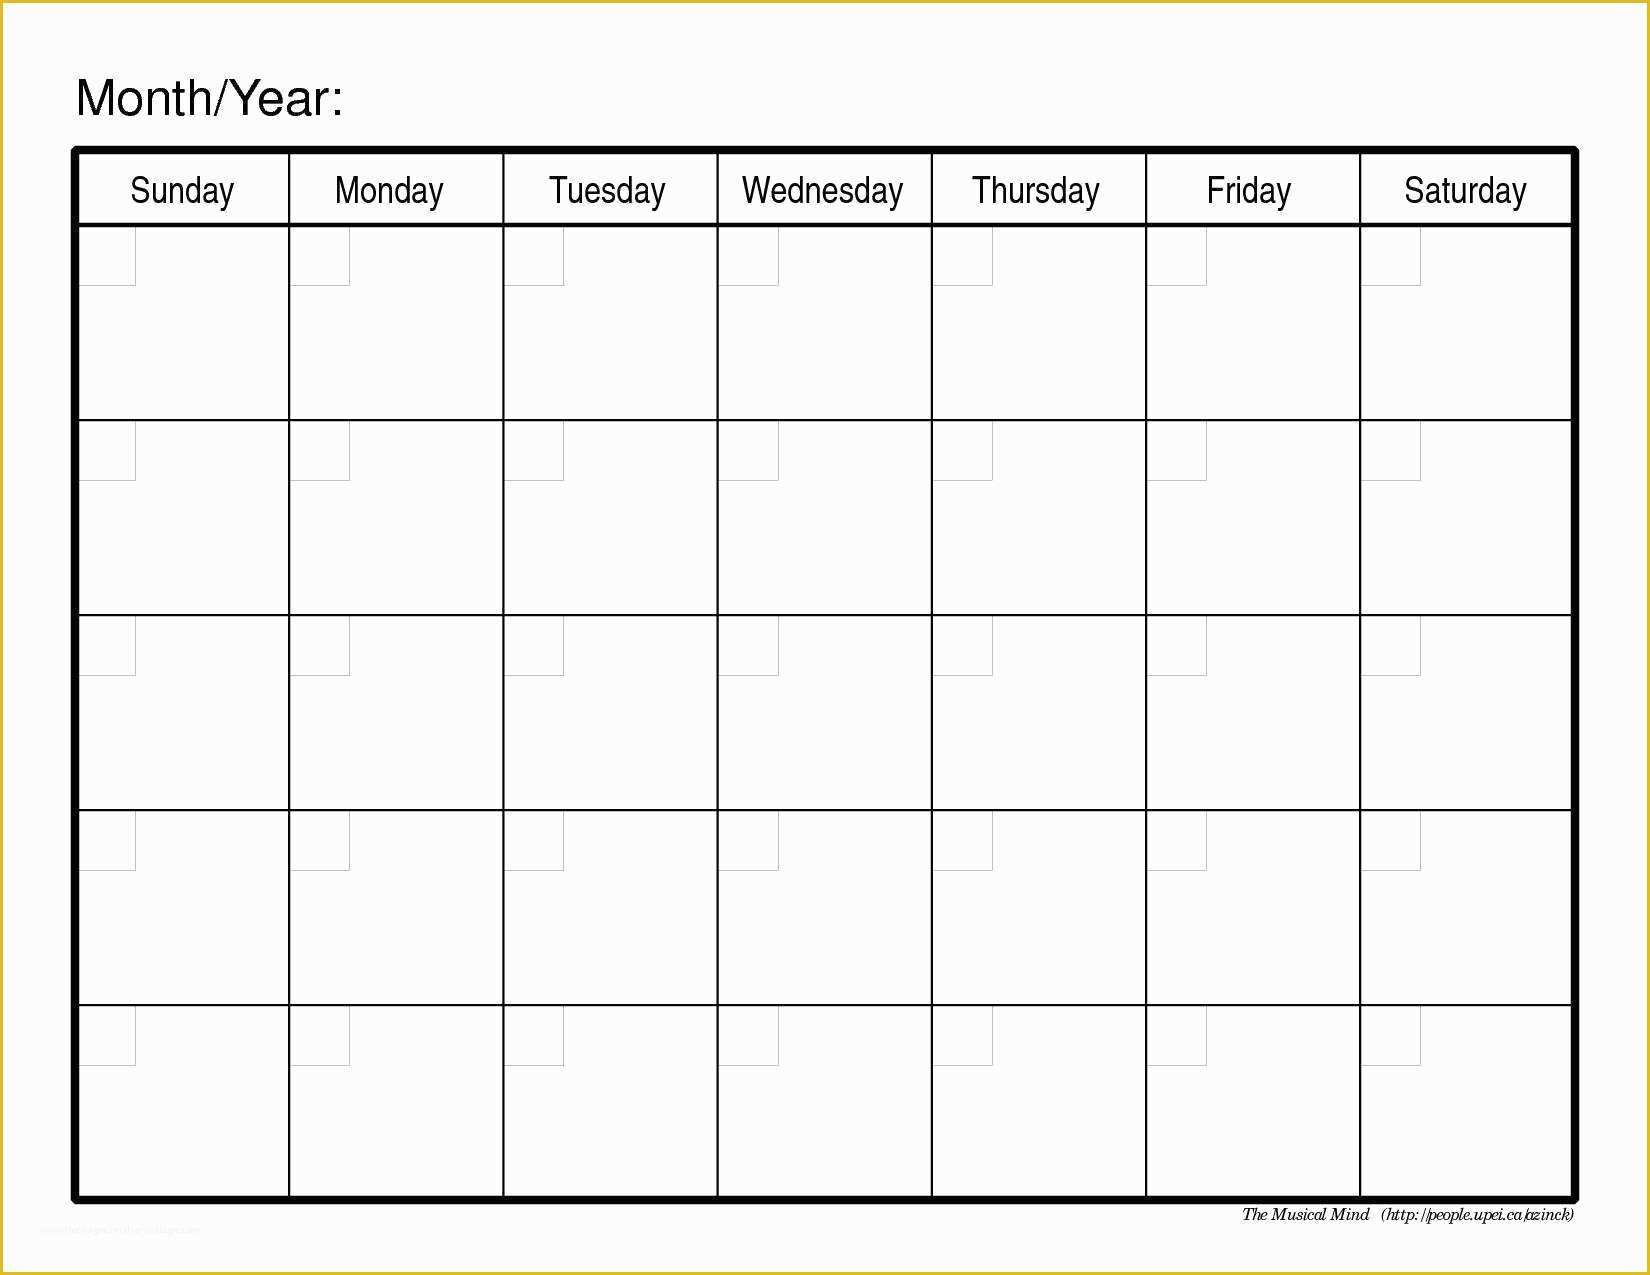 Free Scheduling Calendar Template Of Monthly Calendar Template